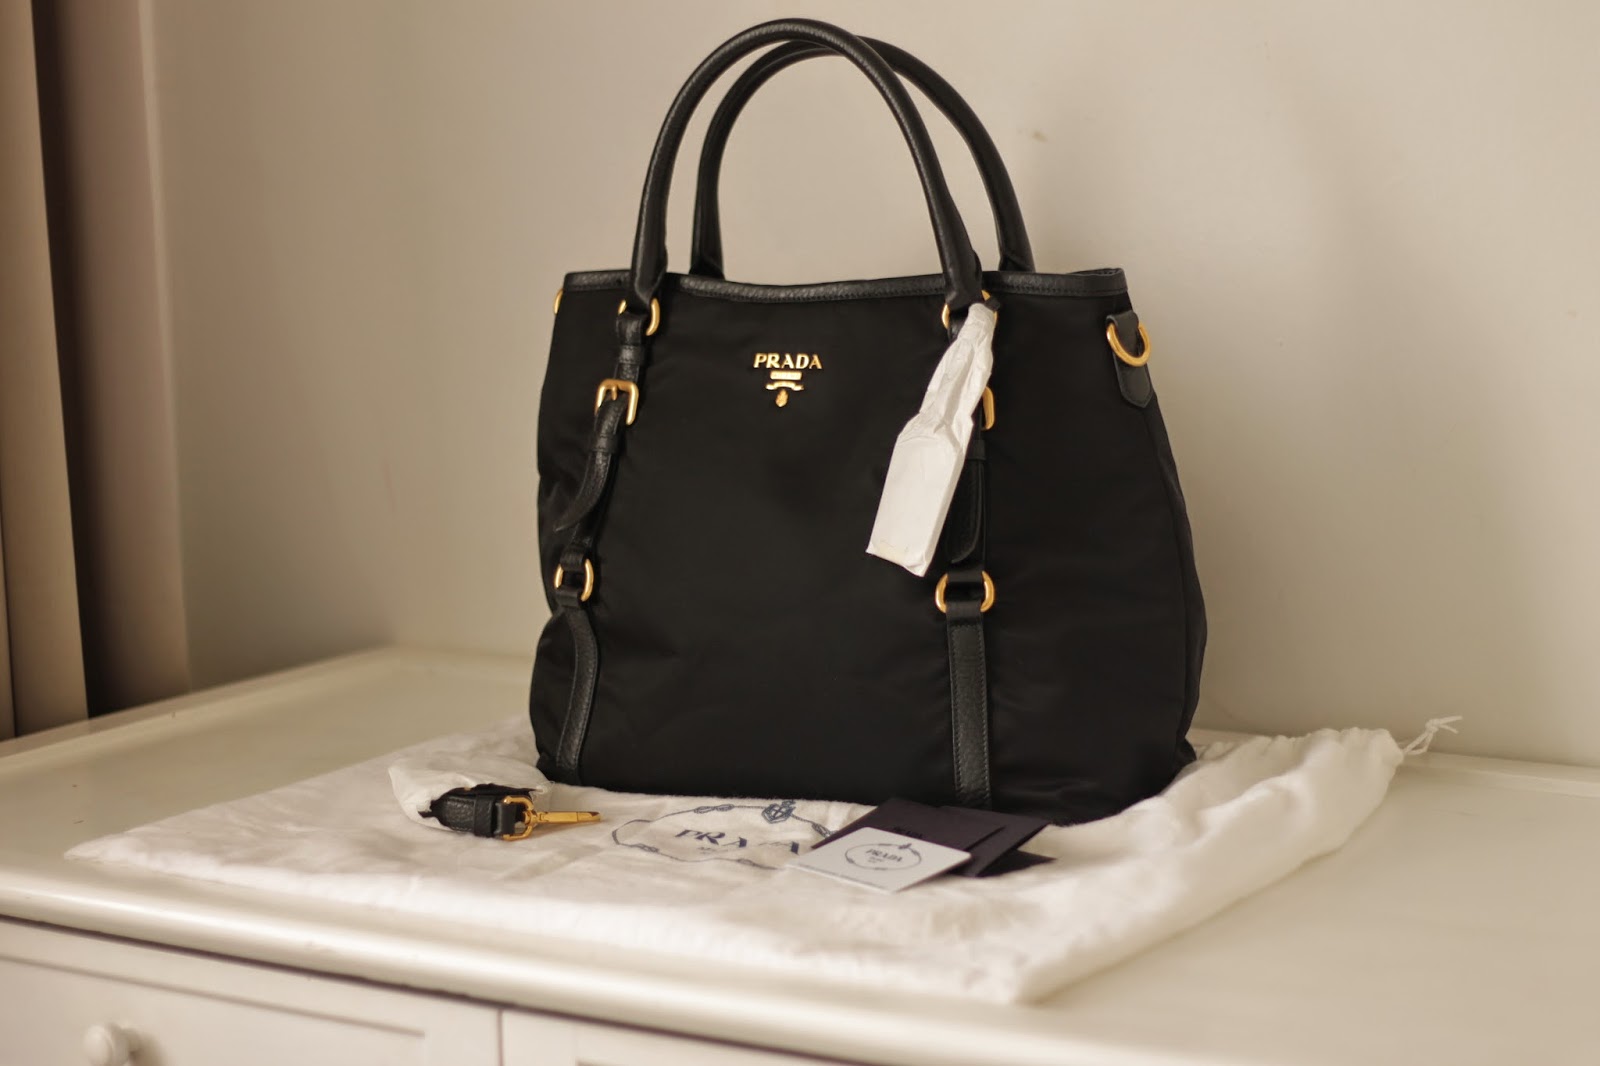 iiloike designer bags: Prada, Gucci, Tods, Chanel, Bottega Veneta ...